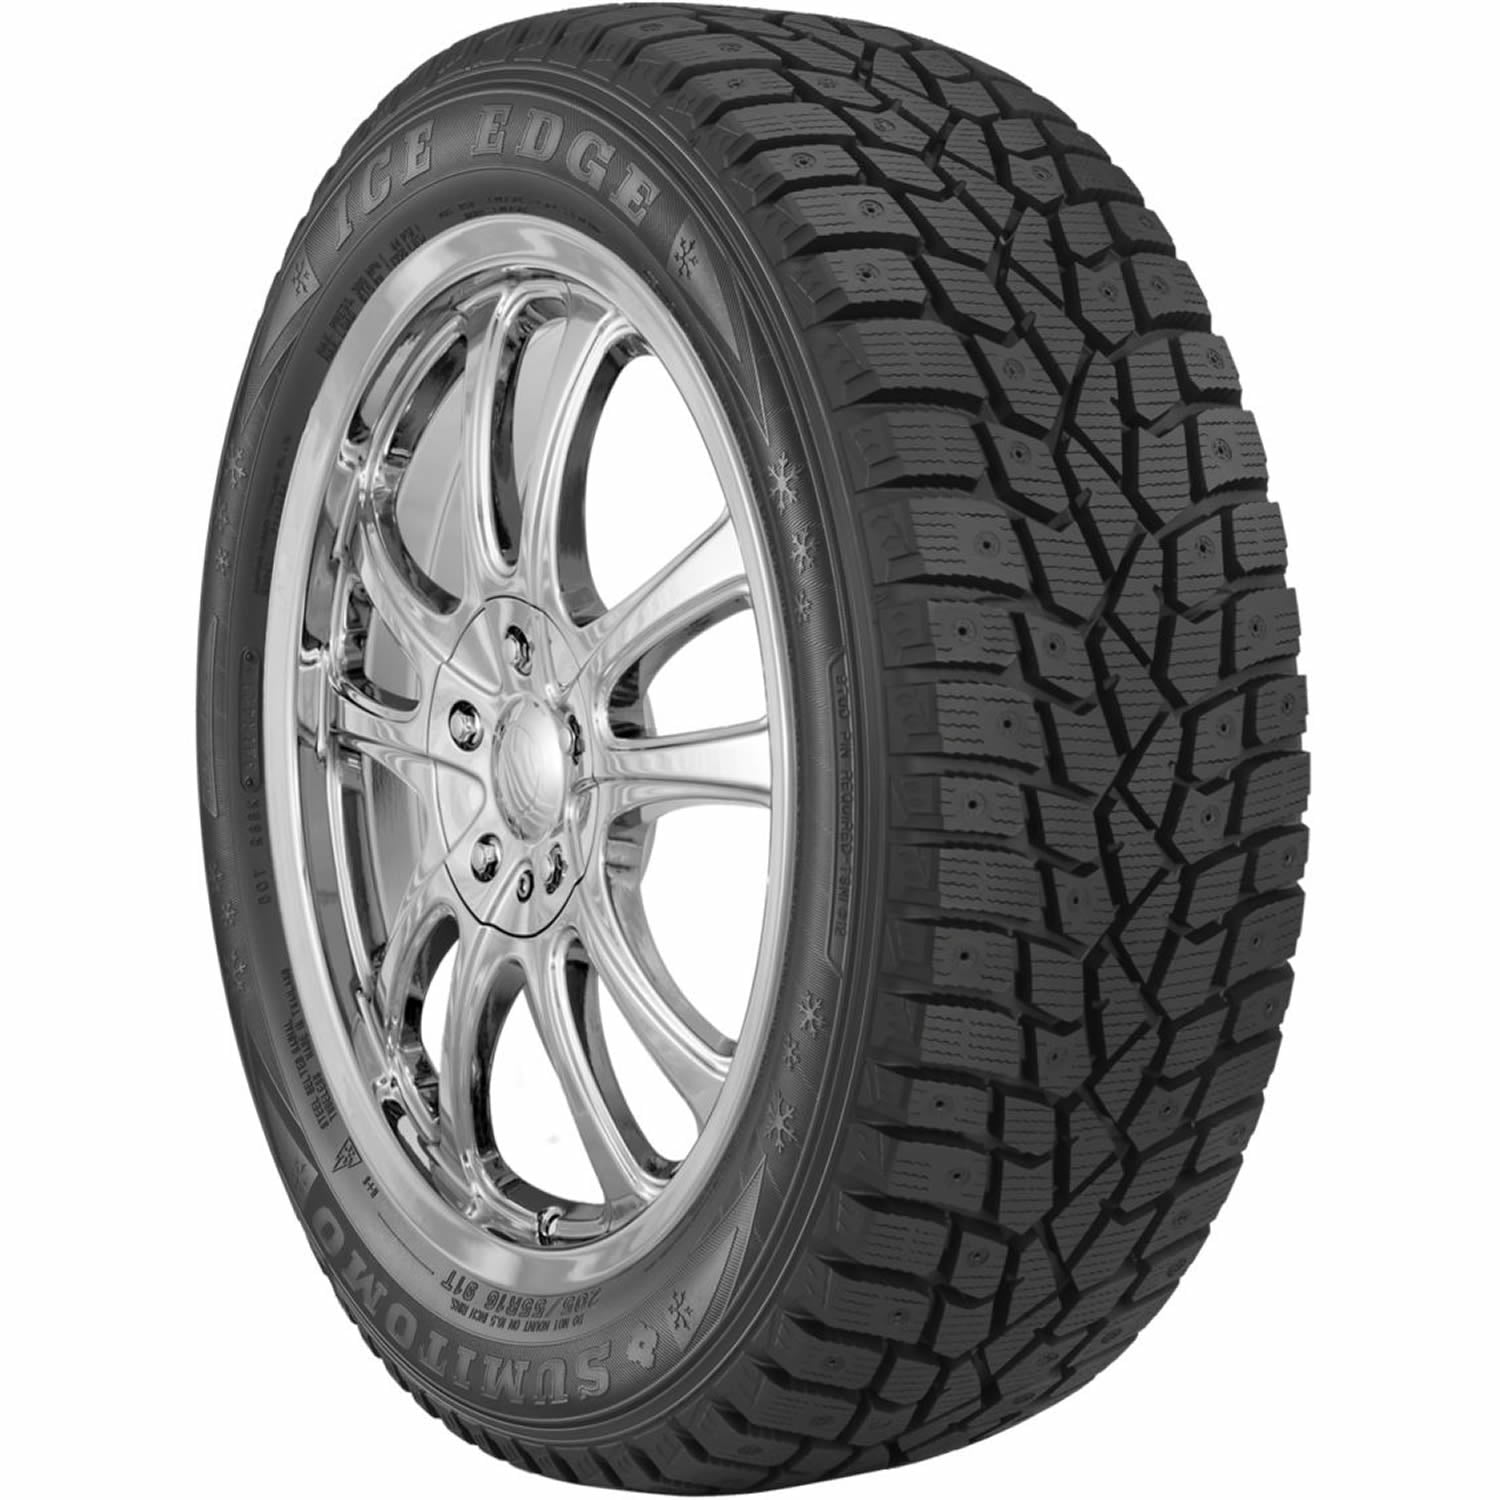 SUMITOMO ICE EDGE 215/60R16 (26.3X8.7R 16) Tires